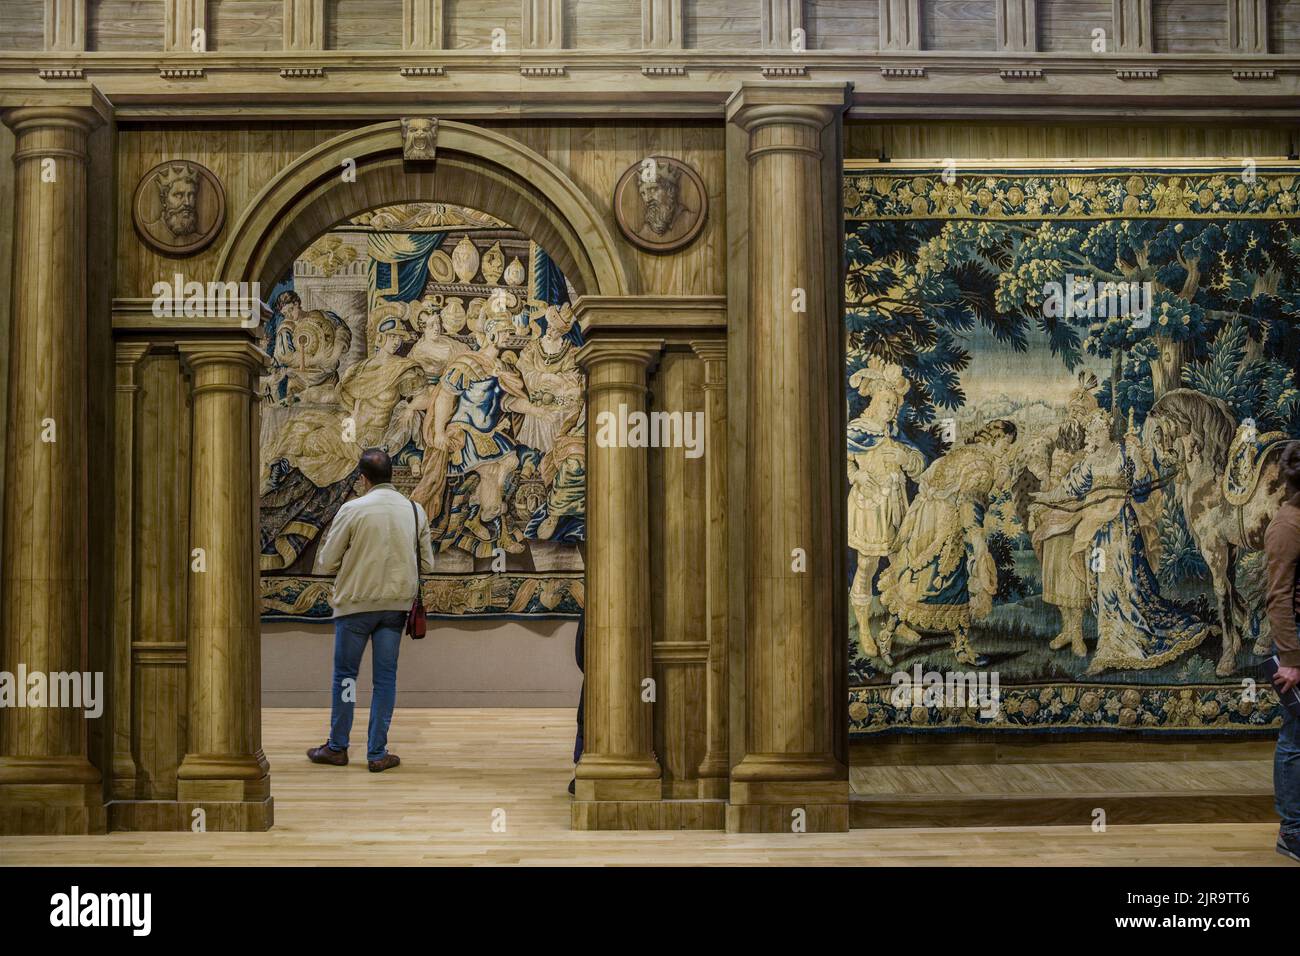 Aubusson (central France): The International Tapestry Museum (Cite internationale de la tapisserie) Stock Photo